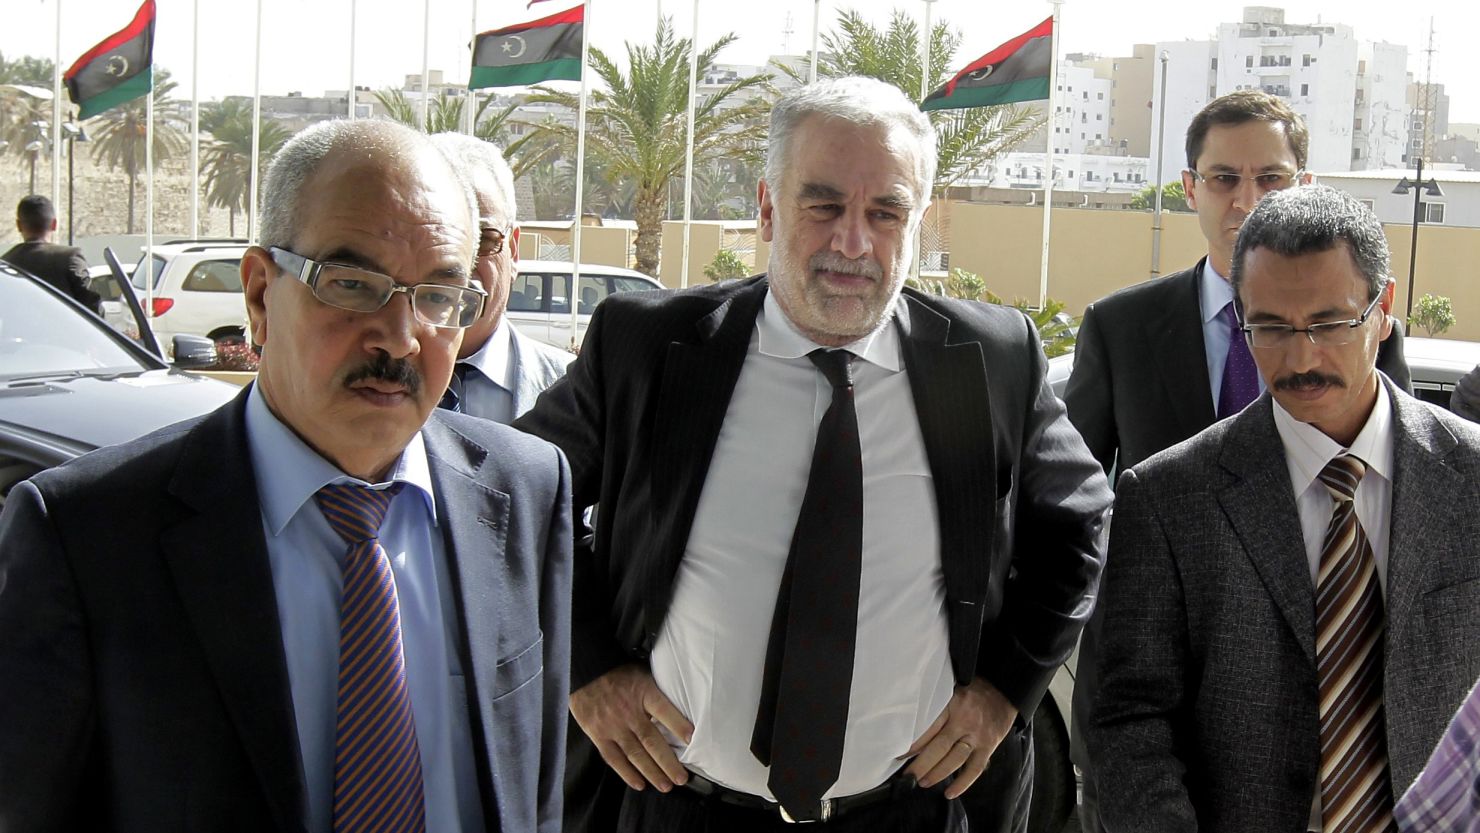 ICC prosecutor Luis Moreno-Ocampo has arrived in Libya following the capture of Saif al-Islam Gadhafi and Abdullah al-Senussi.